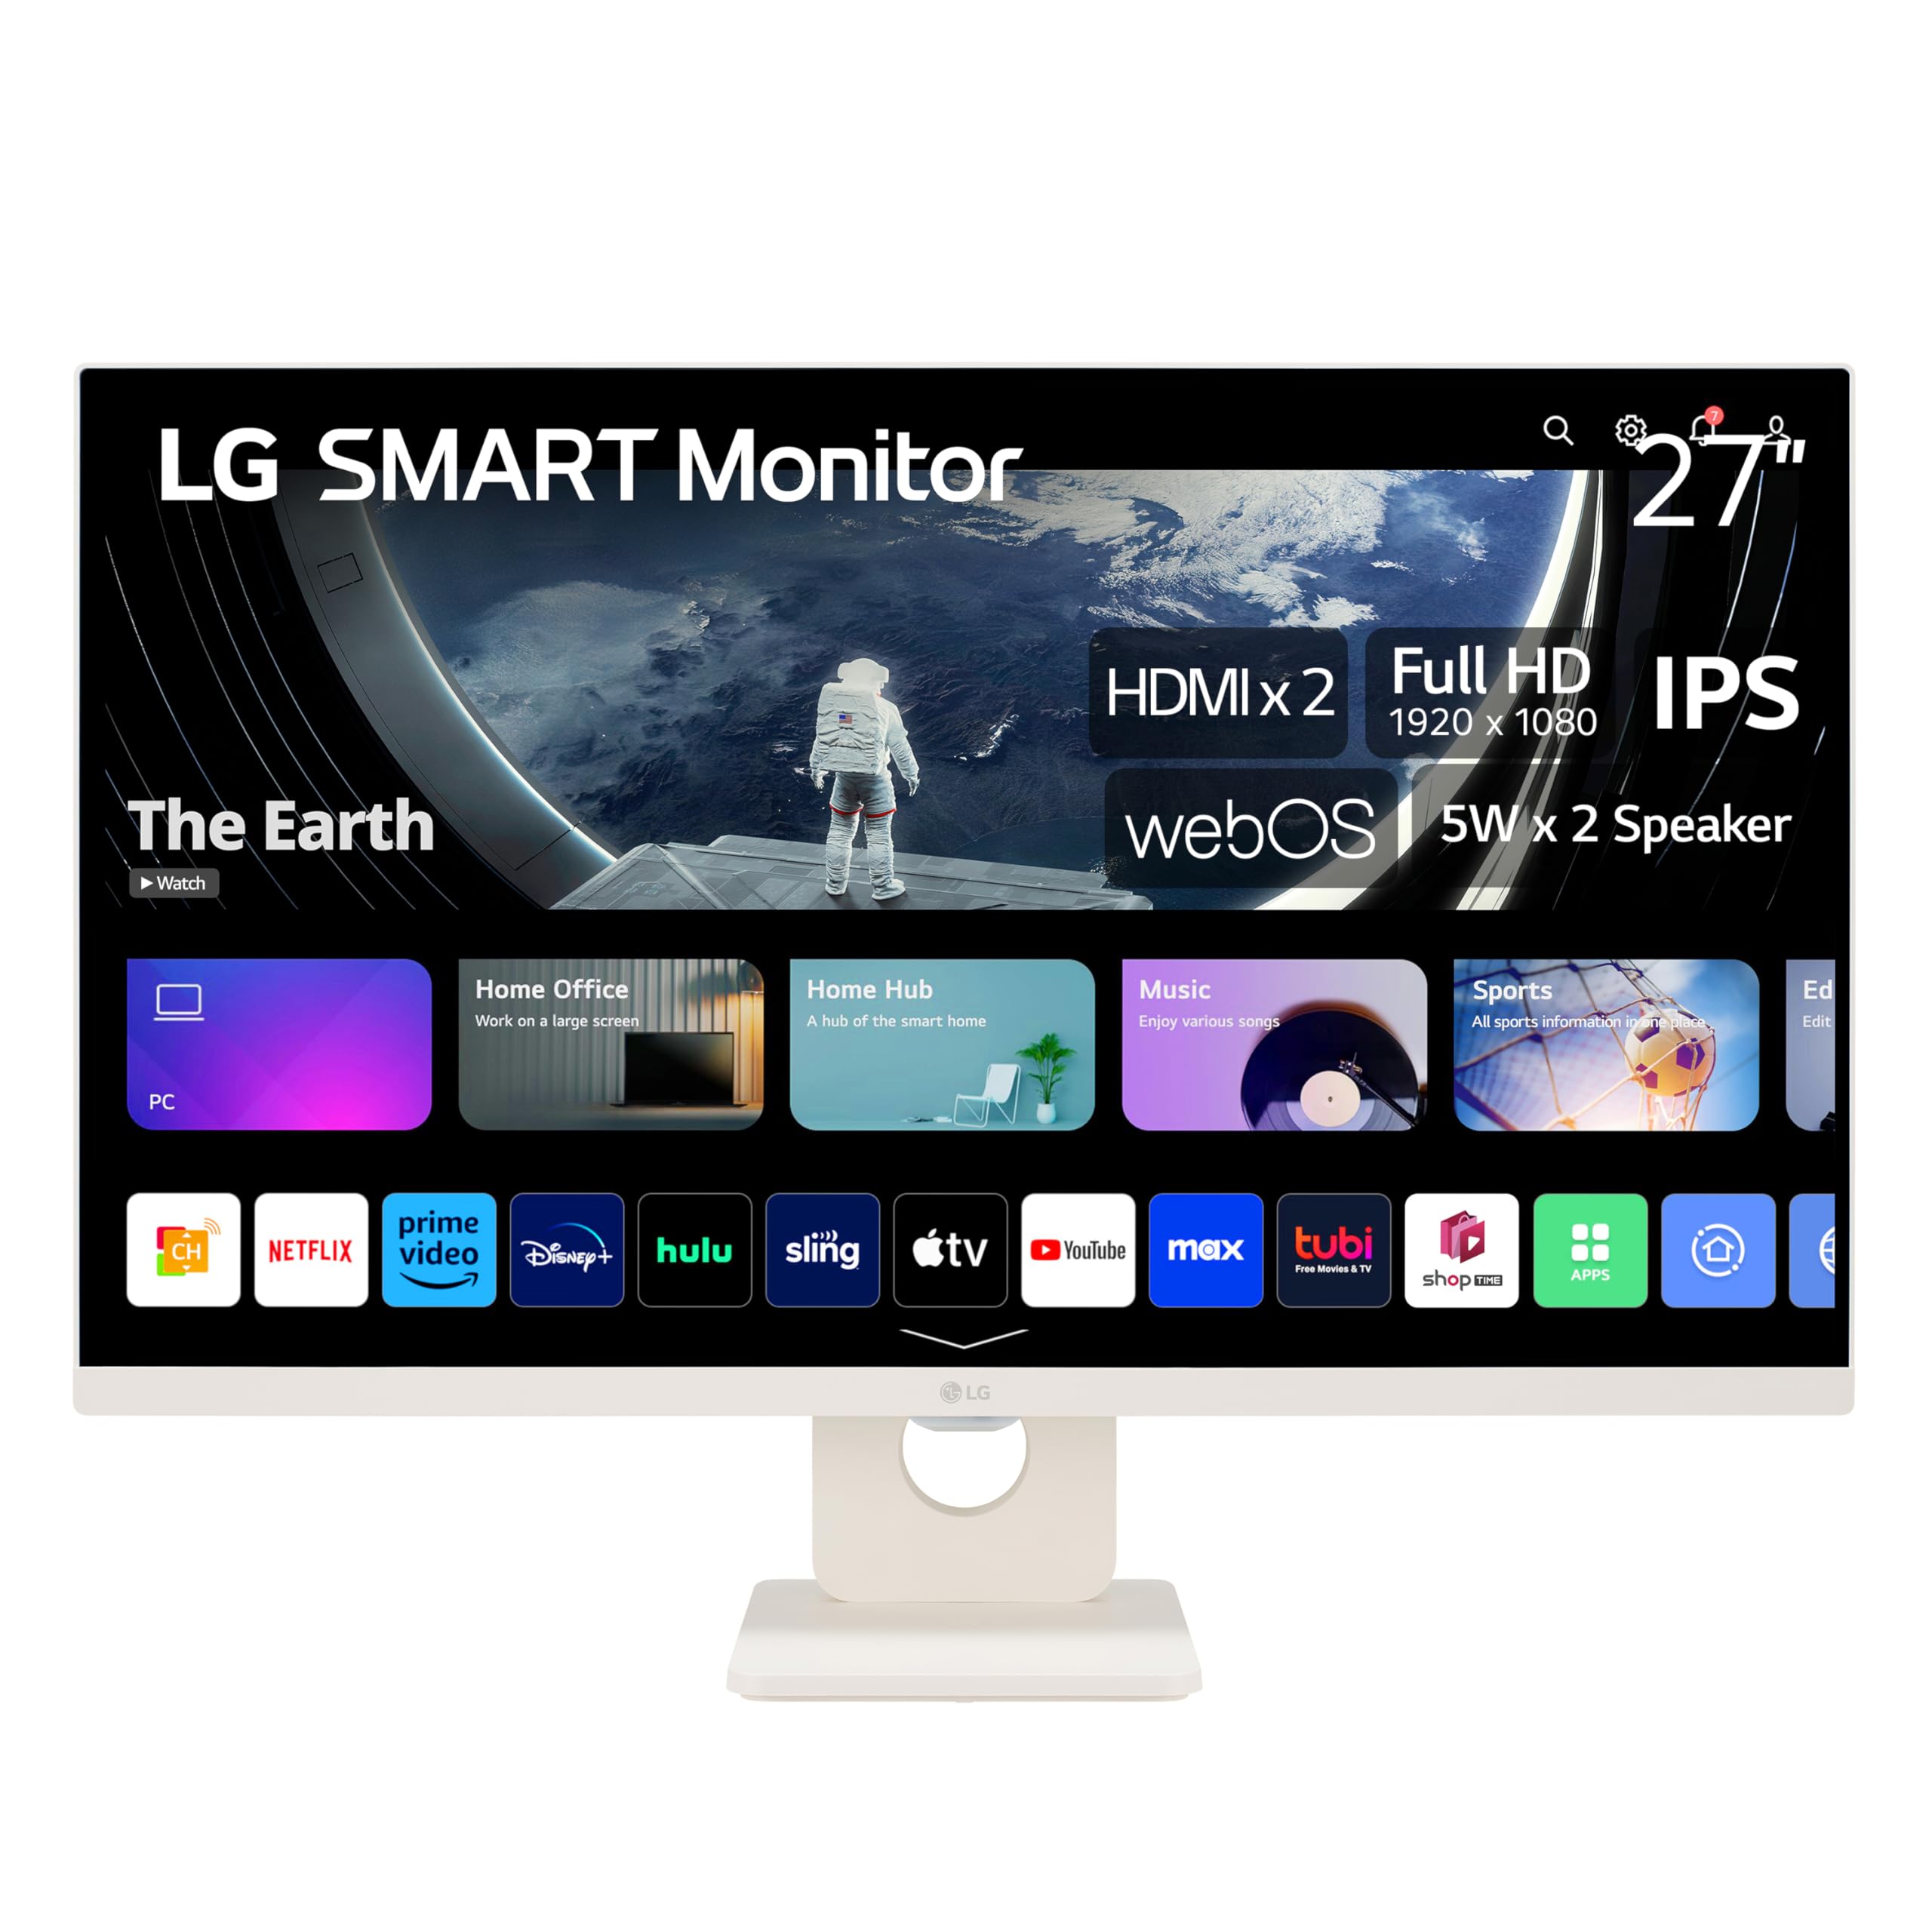 27" FHD IPS Smart Monitor